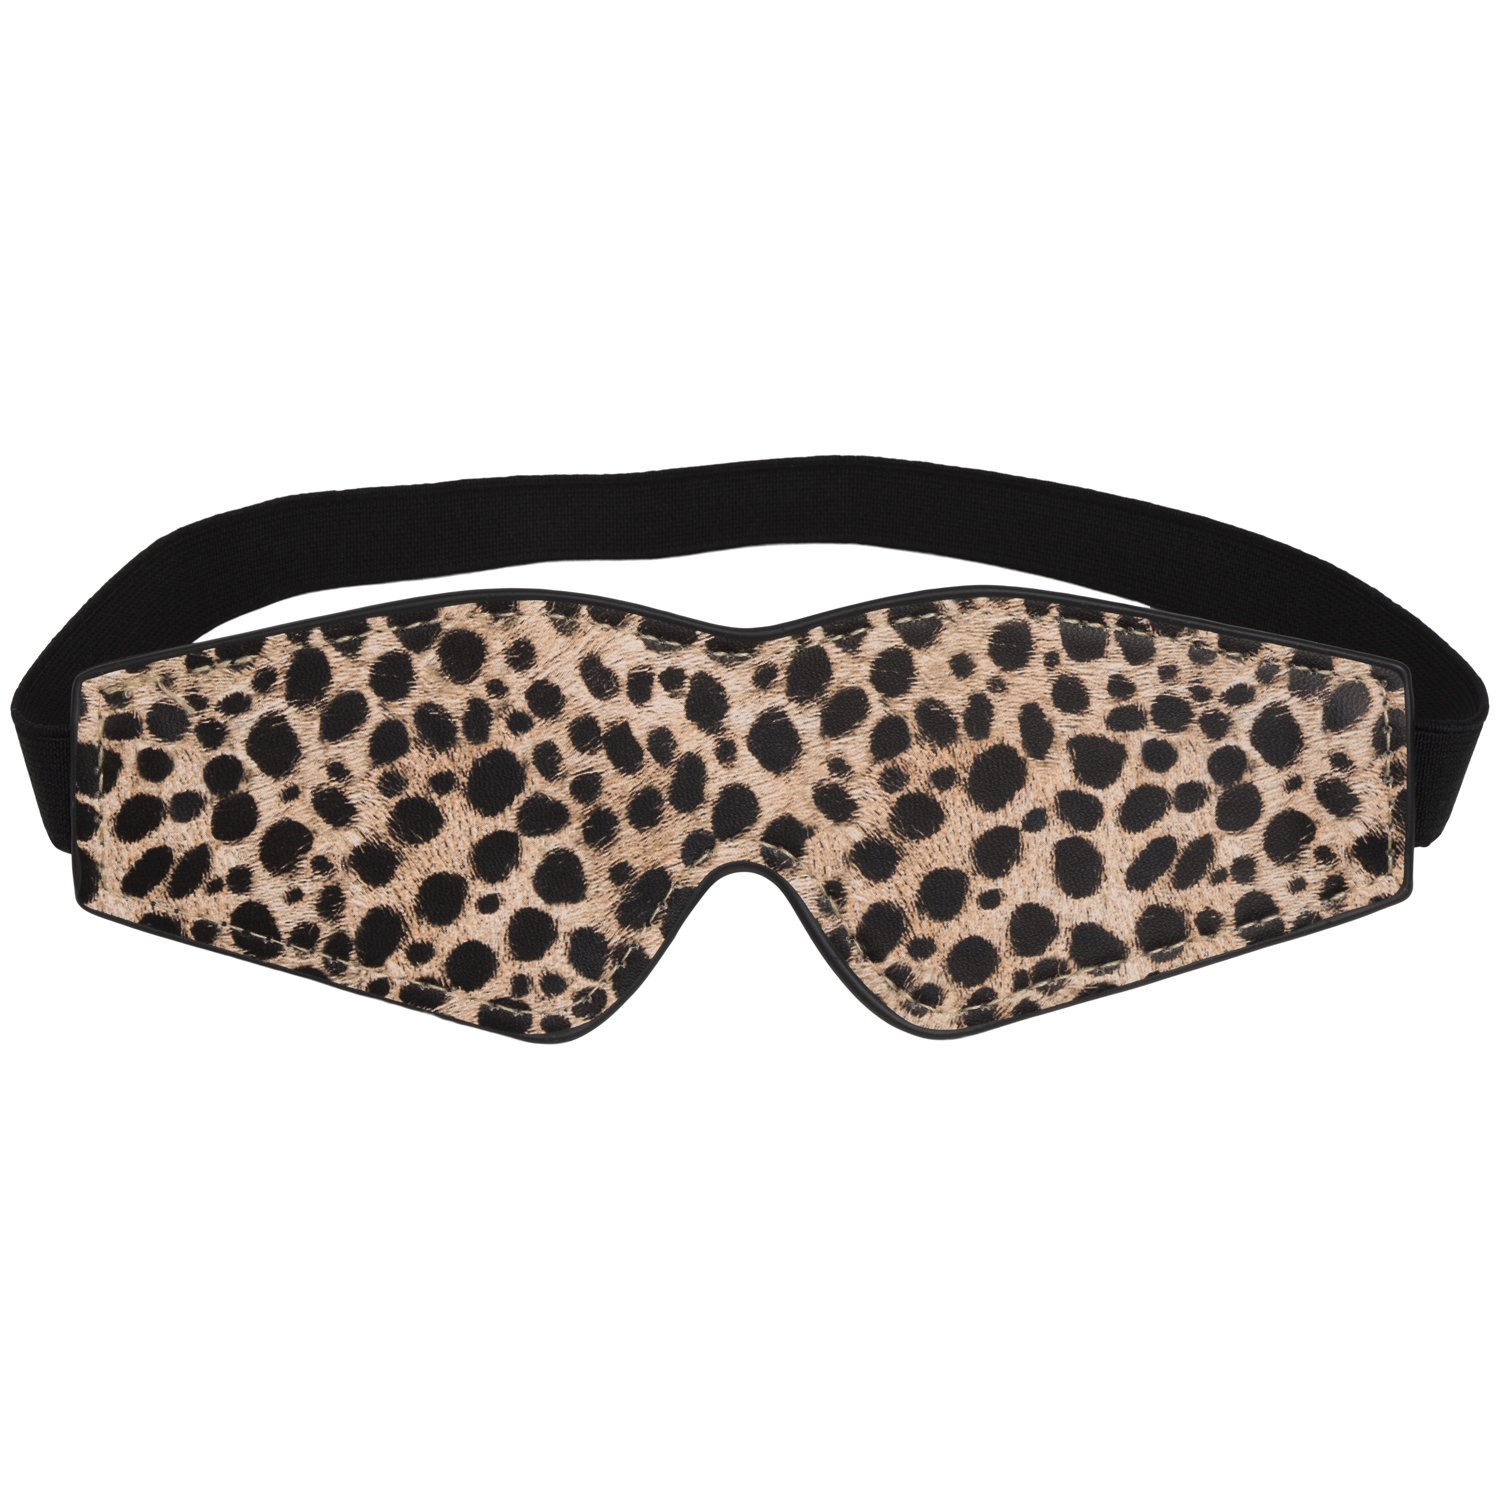 8: baseks Leopard Blindfold        - Brown - One Size